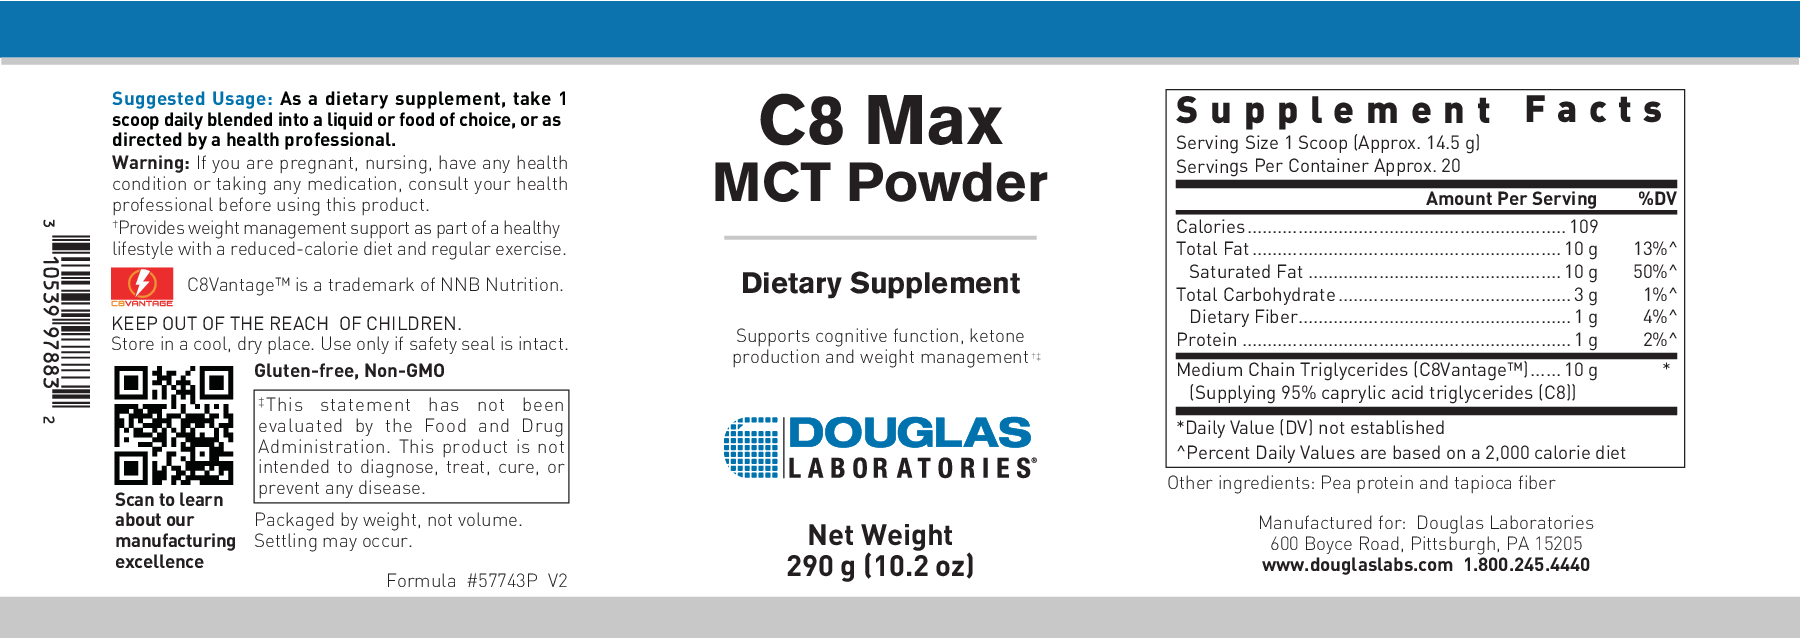 Douglas Laboratories® C8 Max MCT Powder 20 servings